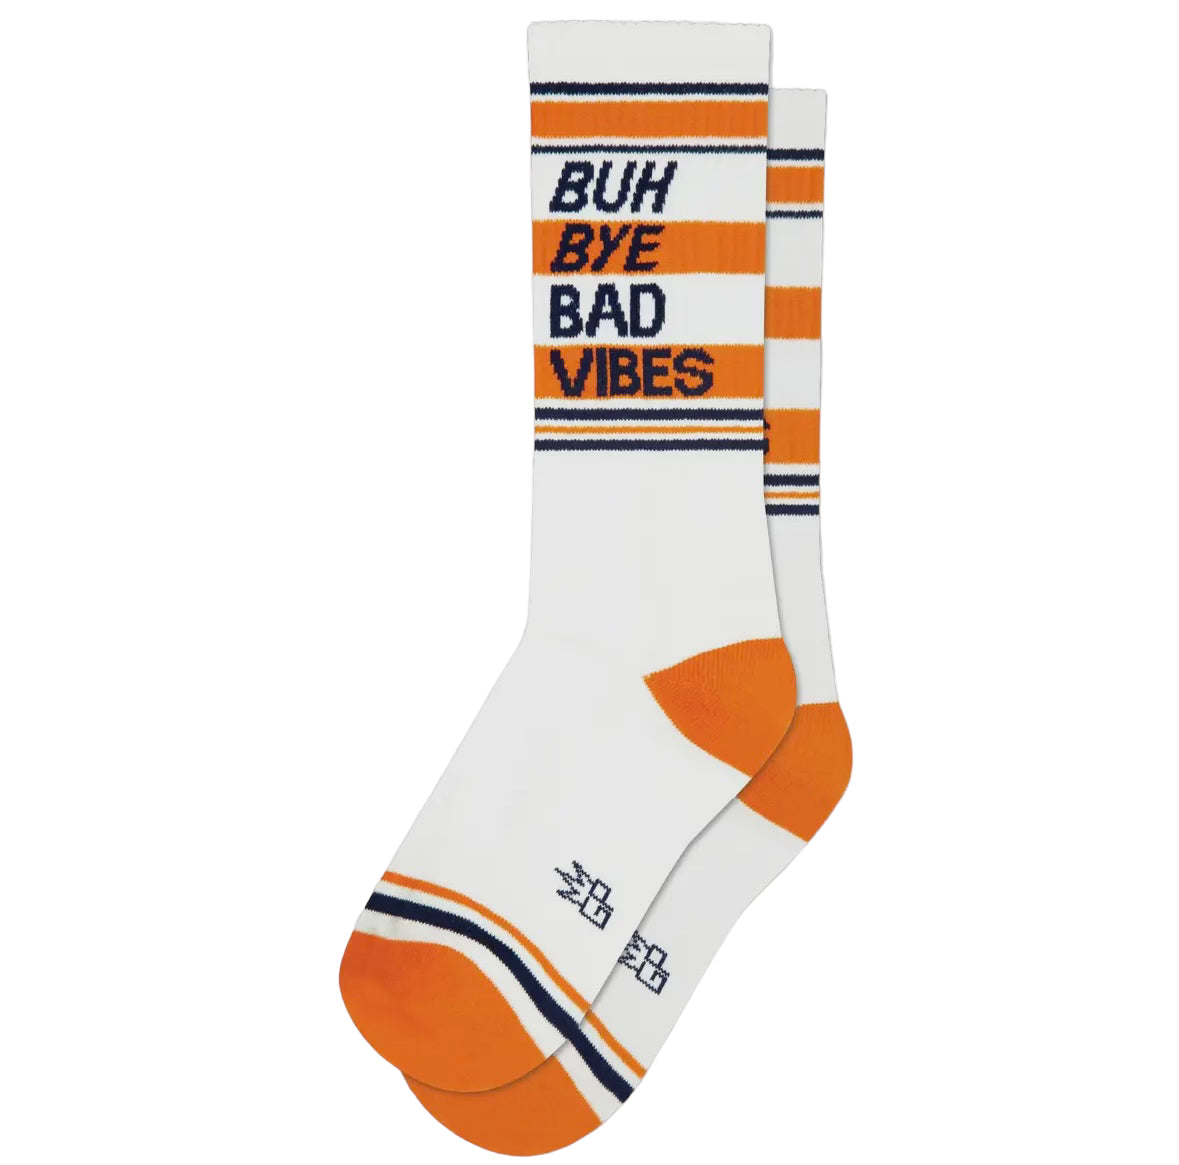 Gumball Poodle Socks: Buh Bye Bad Vibes – theroyalnative